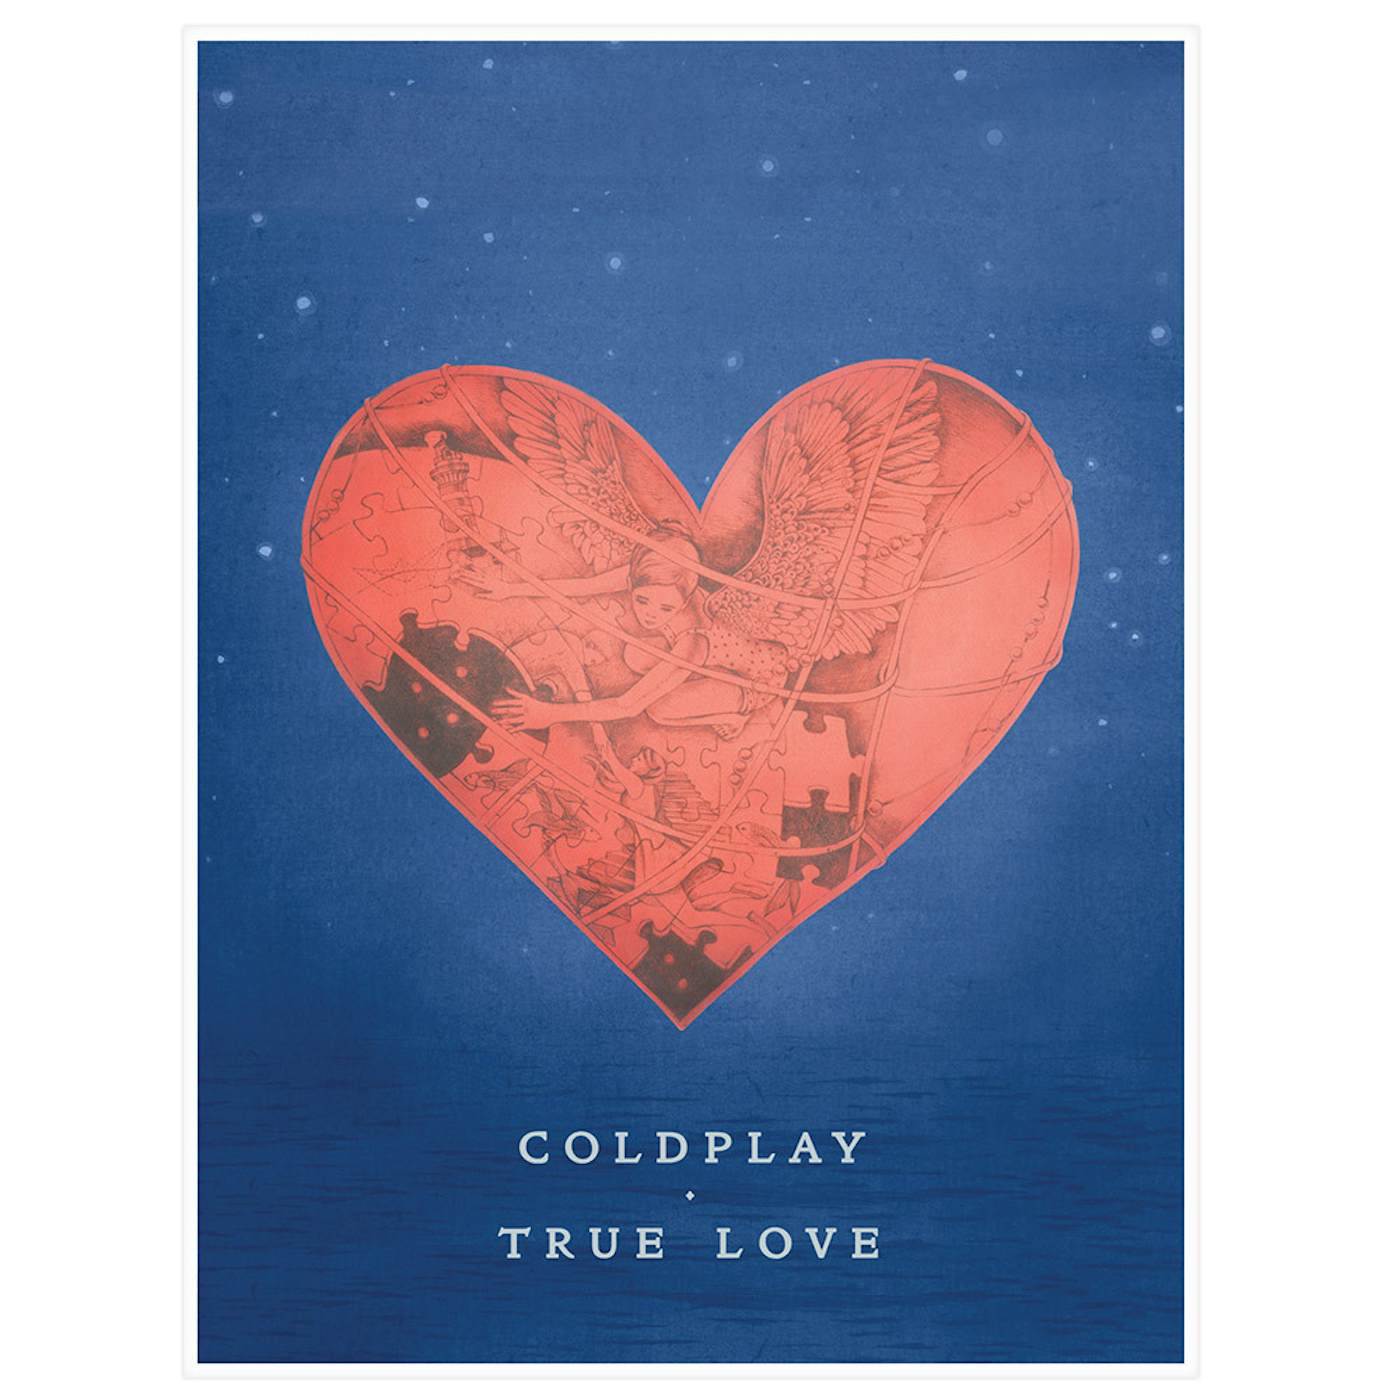 Buy Coldplay True Love at